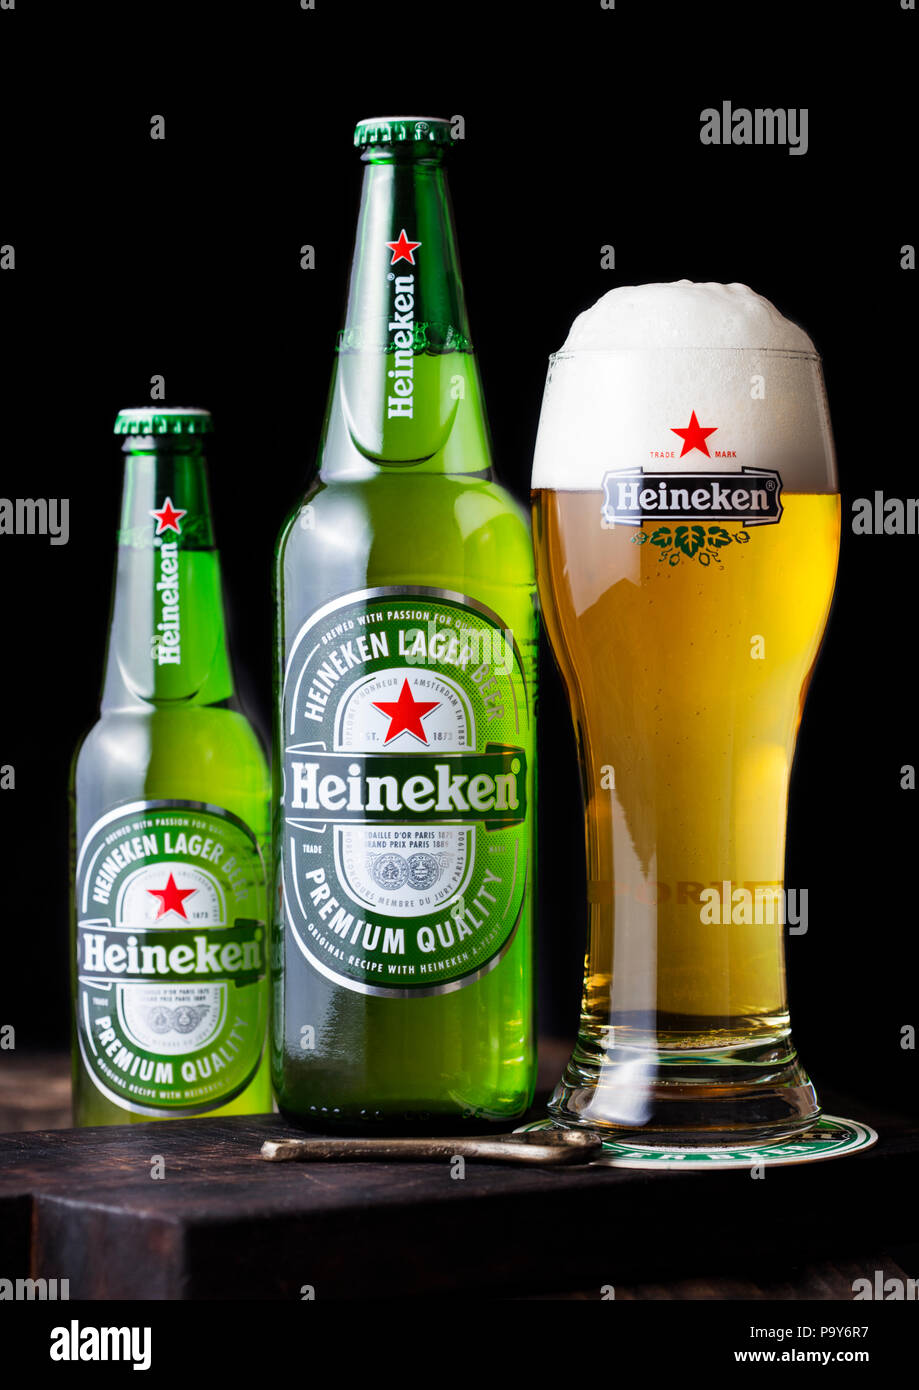 LONDON, UK - APRIL 27, 2018: Bottles and original glass of Heineken Lager Beer on dark wooden background. Heineken is the flagship product of Heineken Stock Photo